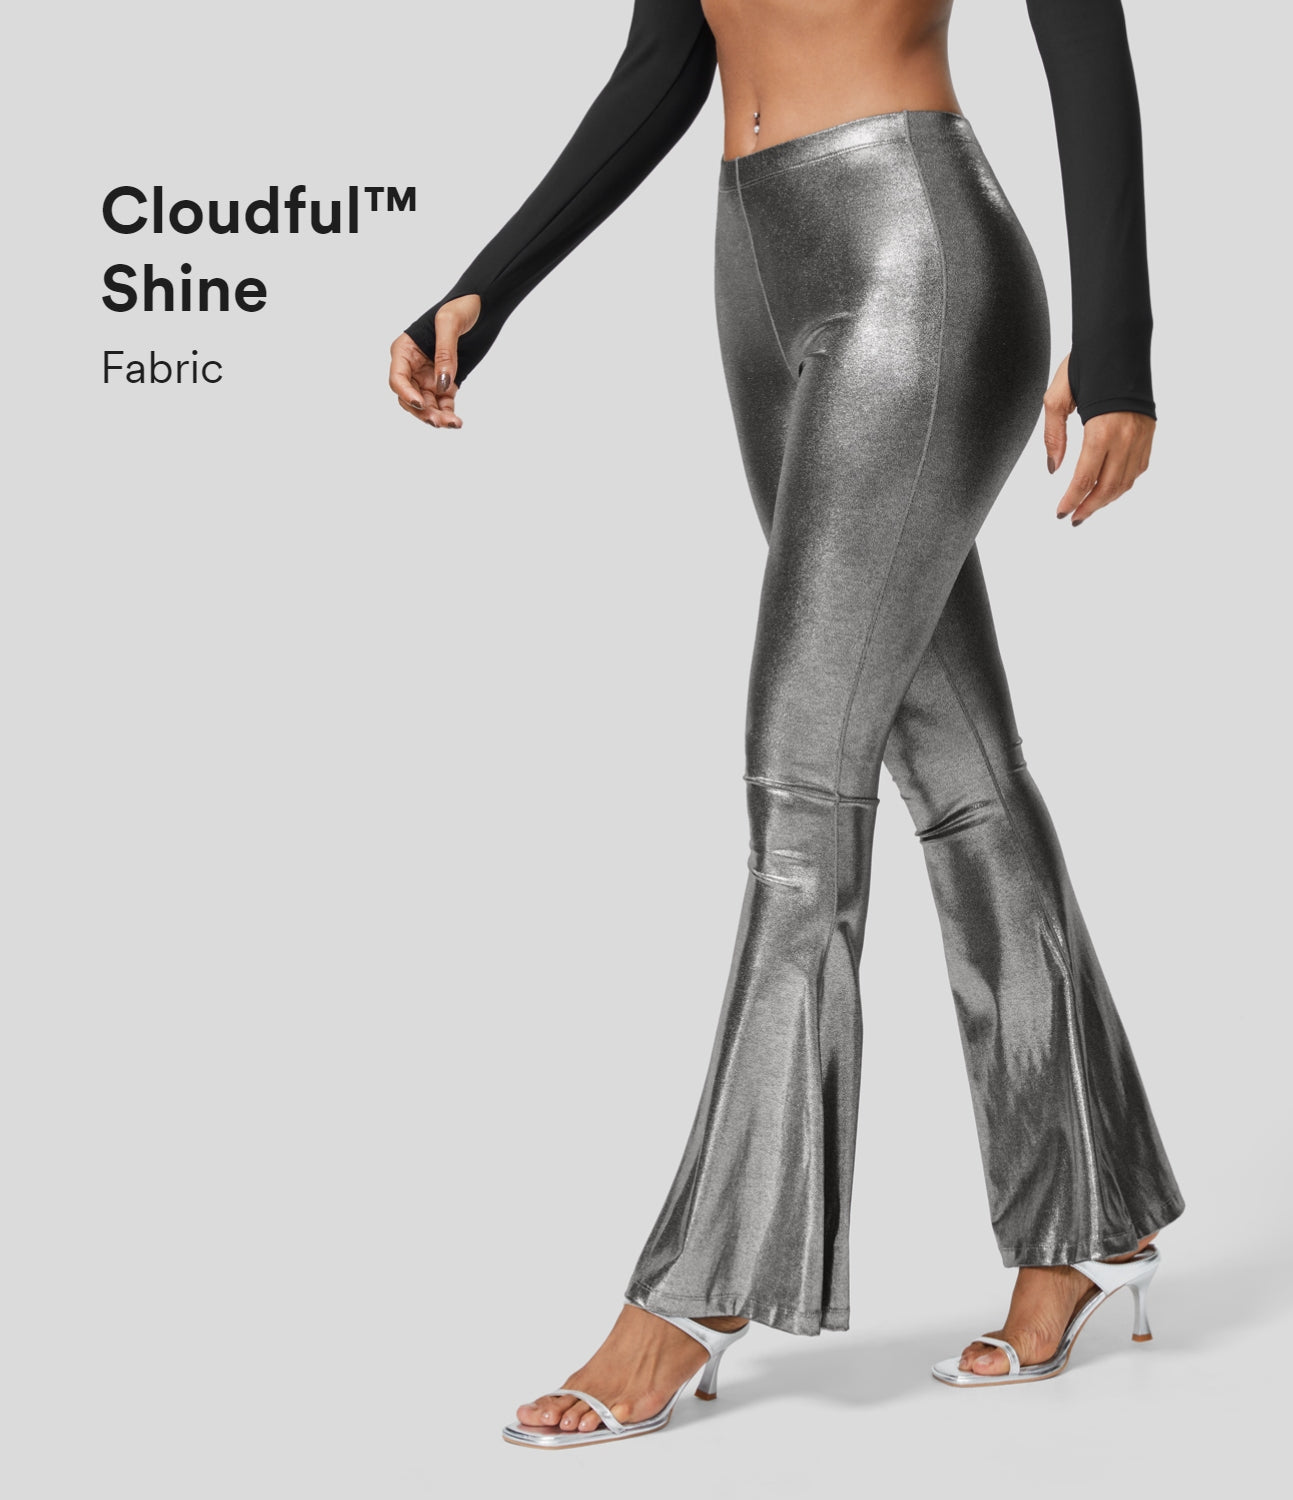 

Halara Cloudfulв„ў Shine Fabric Mid Rise Full Length Metallic Foil Print Stretchy Party Faux Leather Flare Leggings - Shiny Black Silver